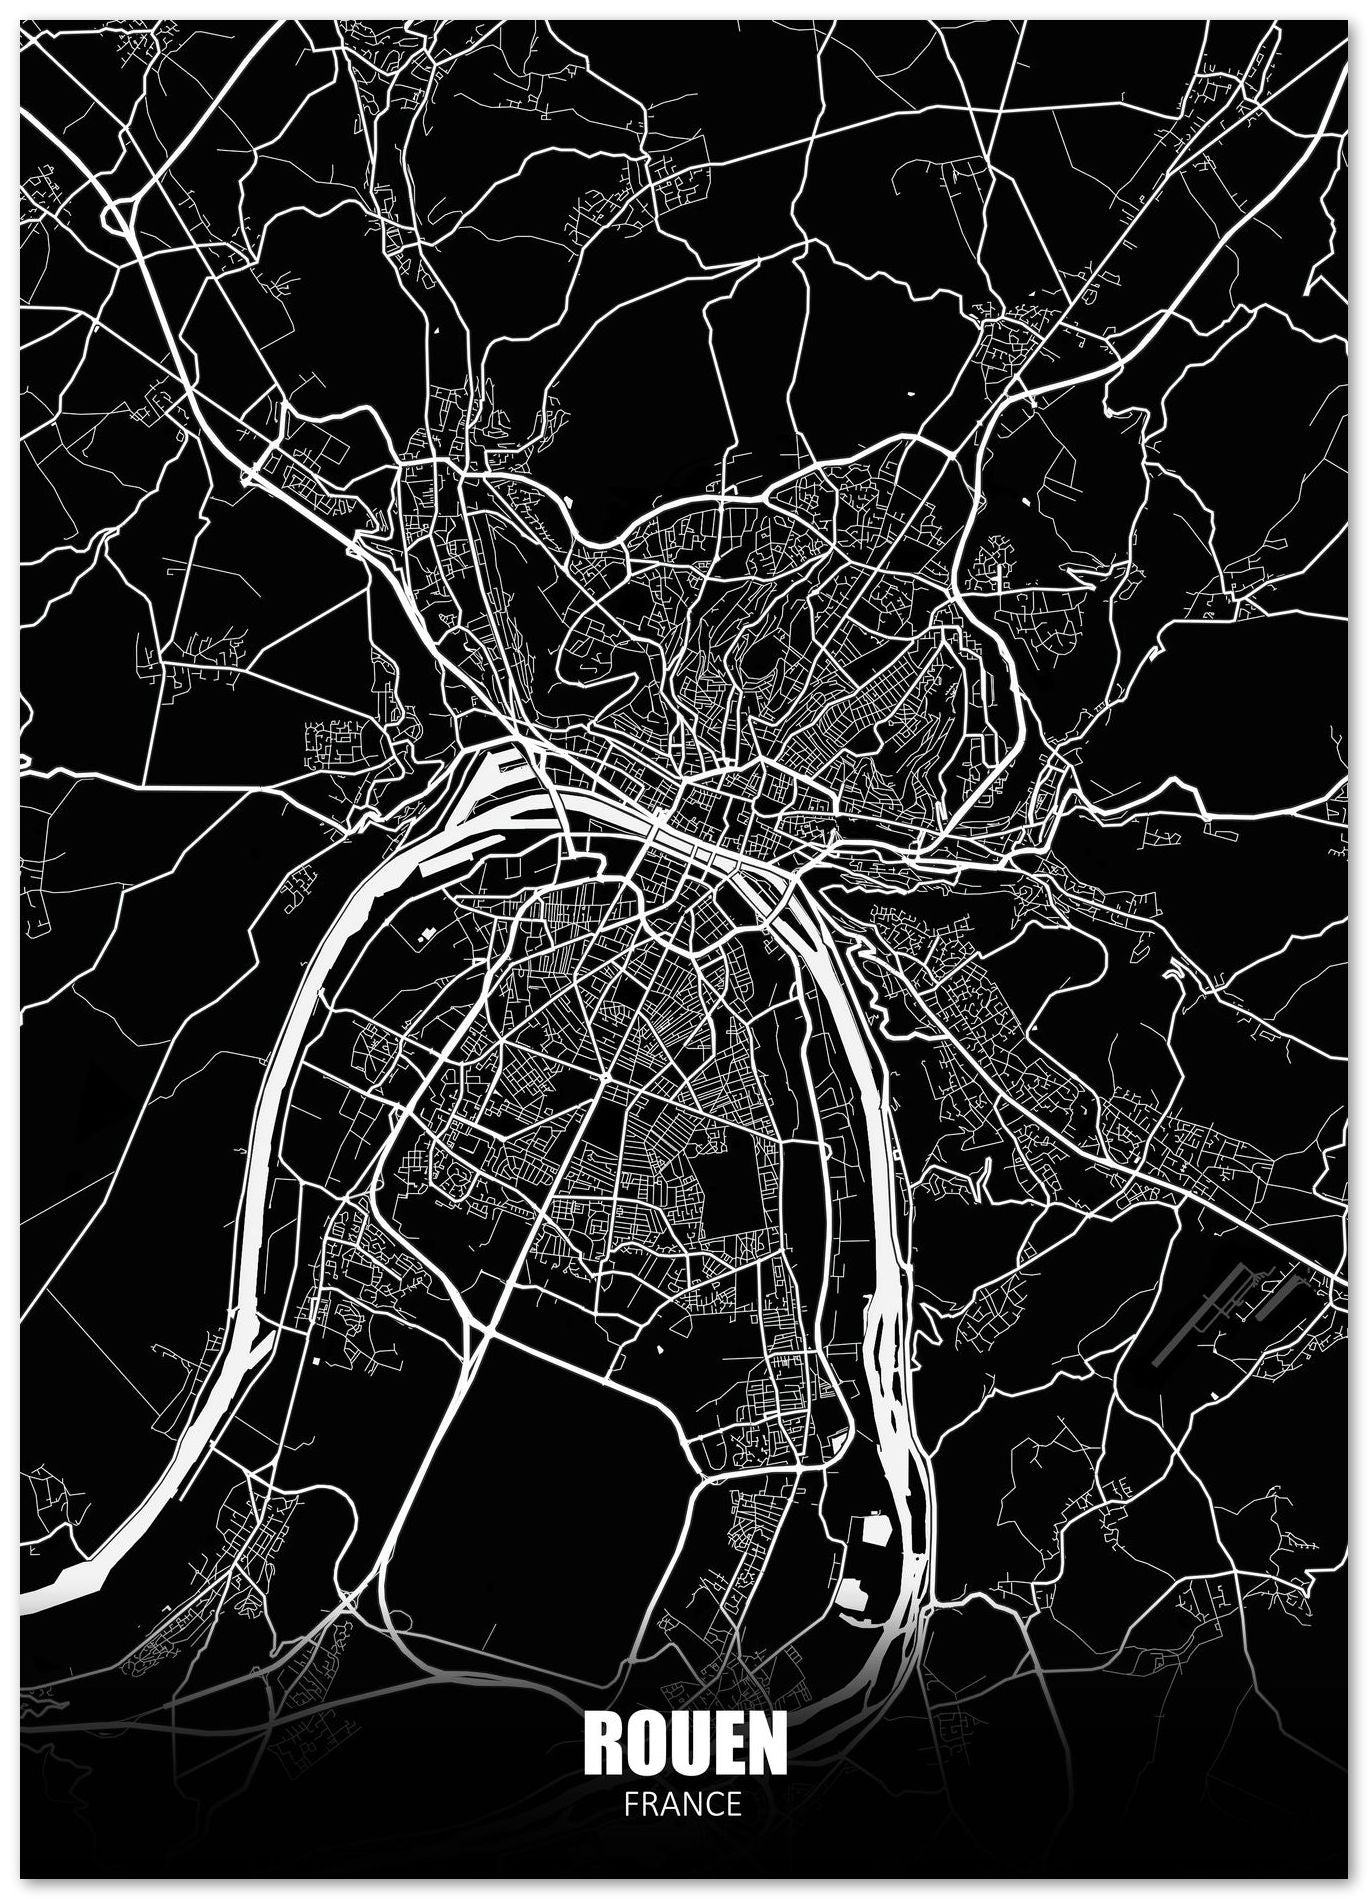 Rouen France Dark Negative Maps - @ZakeDjelevic